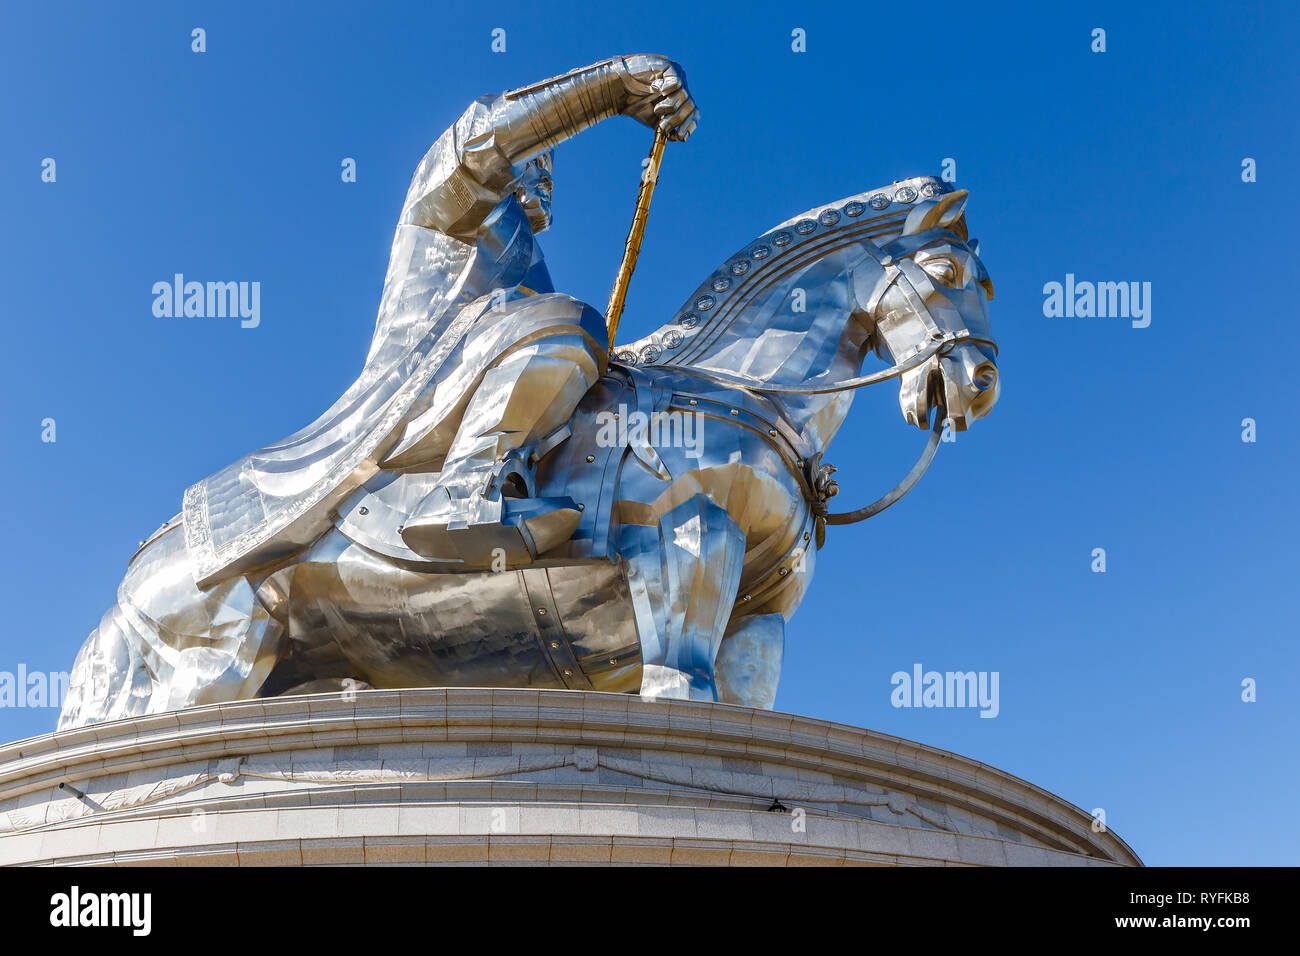 TSONJIN BOLDOG, MONGOLIA - September 14, 2018: The giant Genghis Khan Equestrian Statue is part of the Genghis Khan Statue Complex on the bank of the Tuul River at Tsonjin Boldog, near Ulaanbaatar. Stock Photo